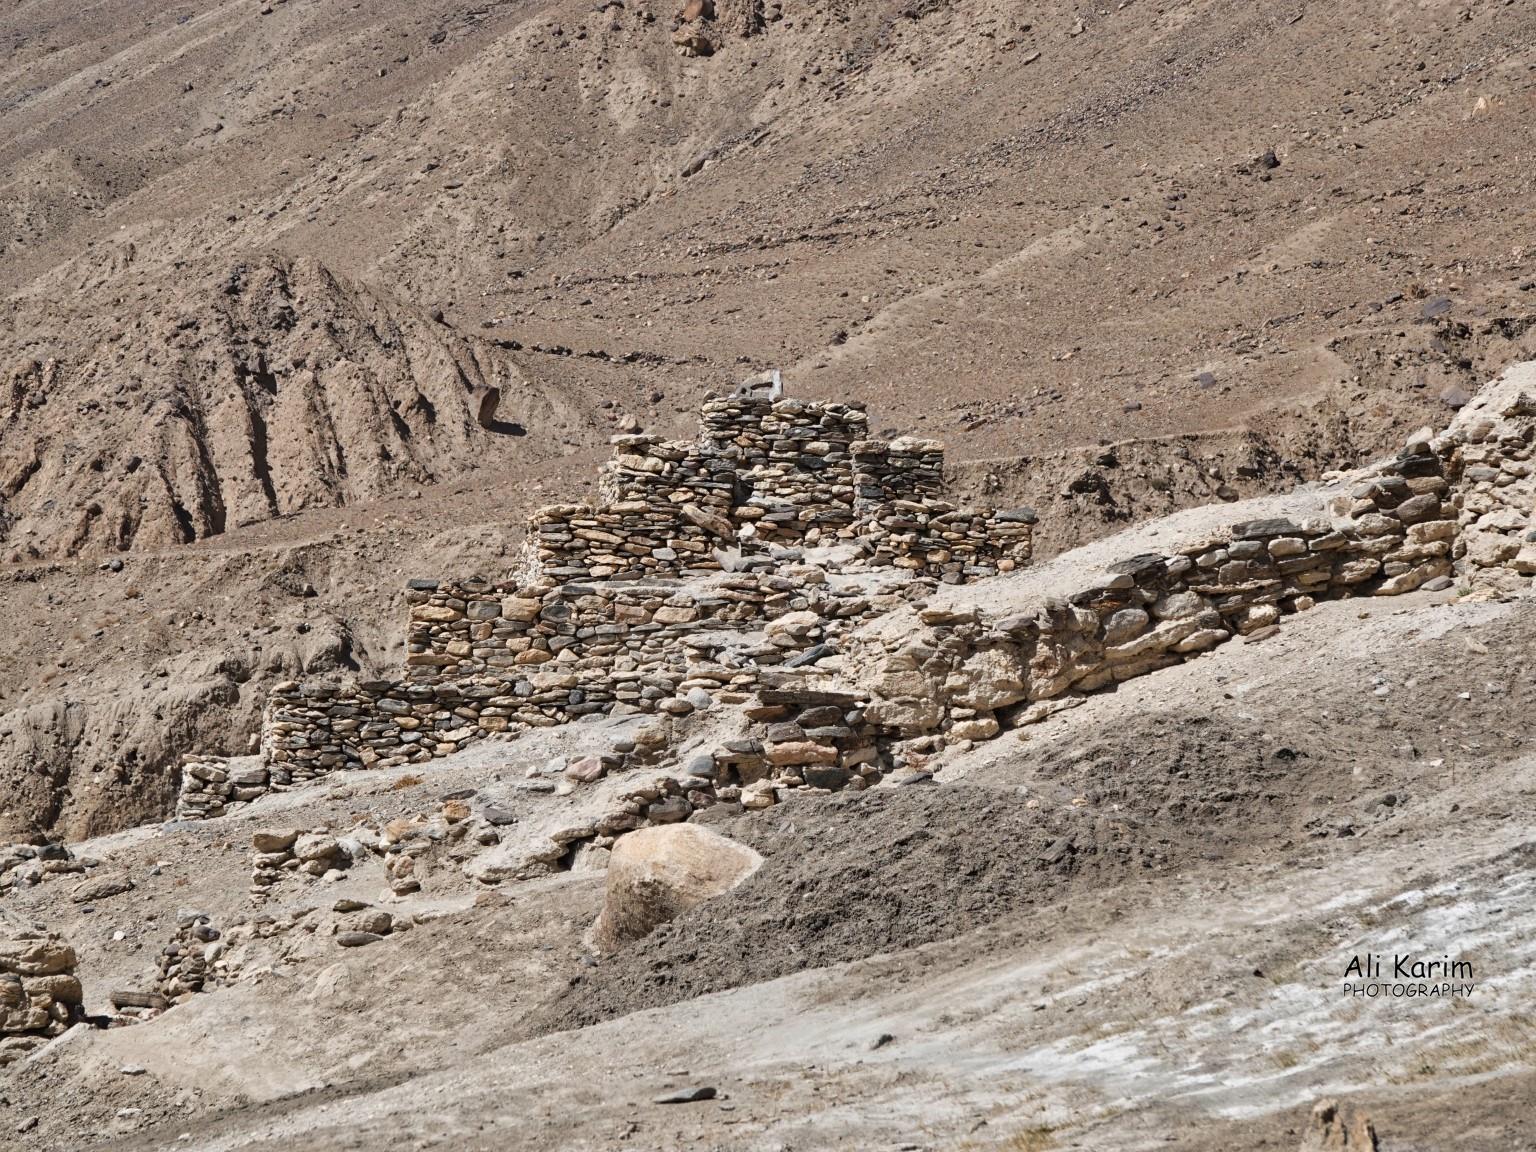 Langar, Bulunkul Tajikistan, Stupka from 5th to 6th century BC, made from rocks; and has its origin in Tibetan Buddhism